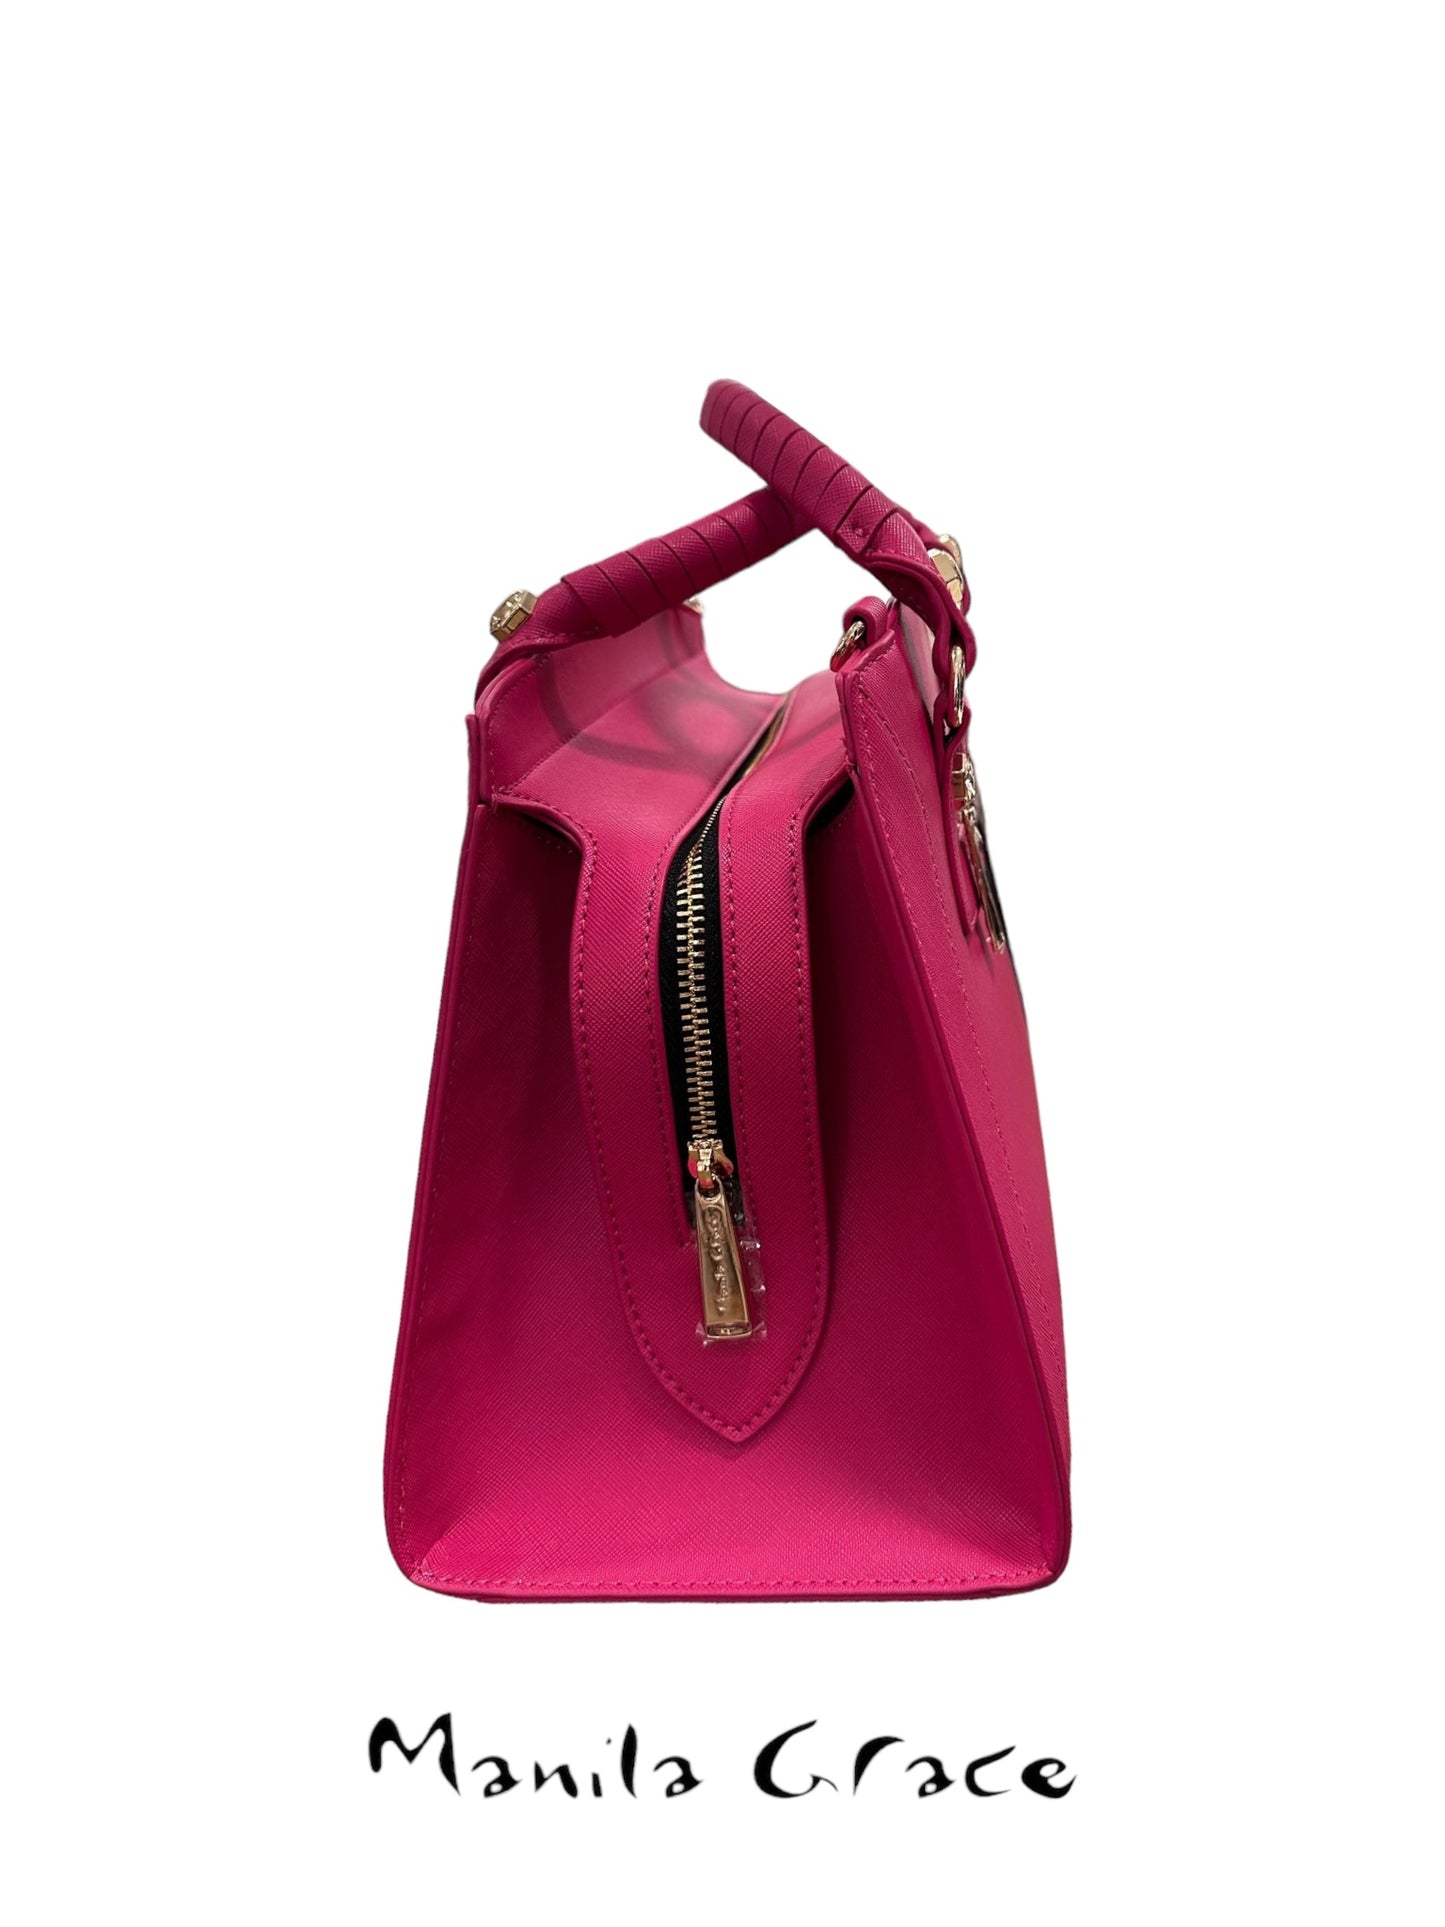 Manila Grace medium shopping bag in fuchsia color